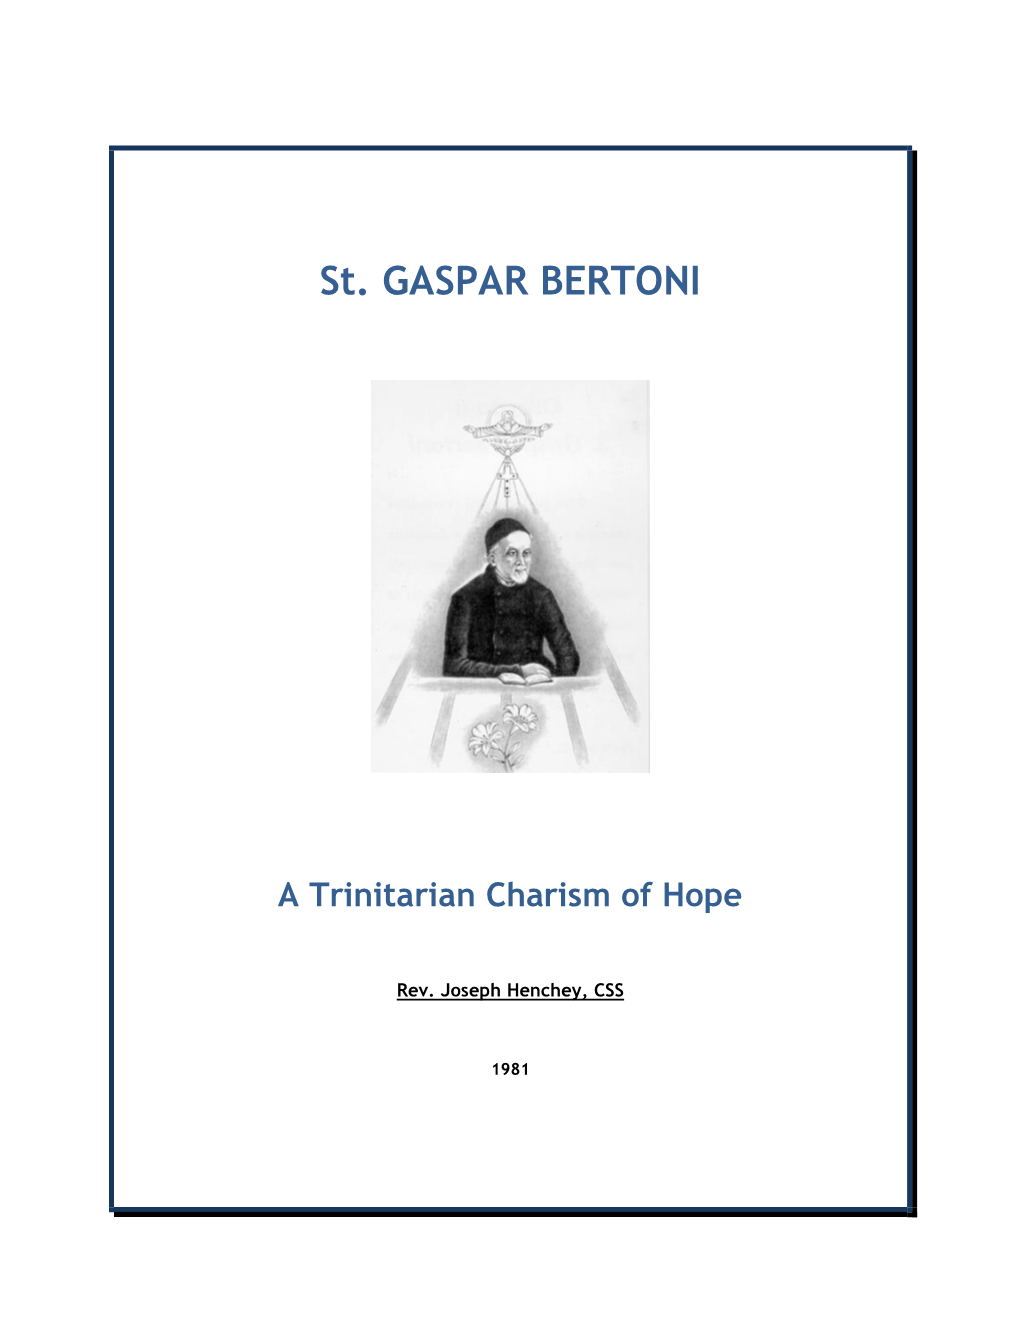 St. Gaspar Bertoni: a Trinitarian Charism of Hope